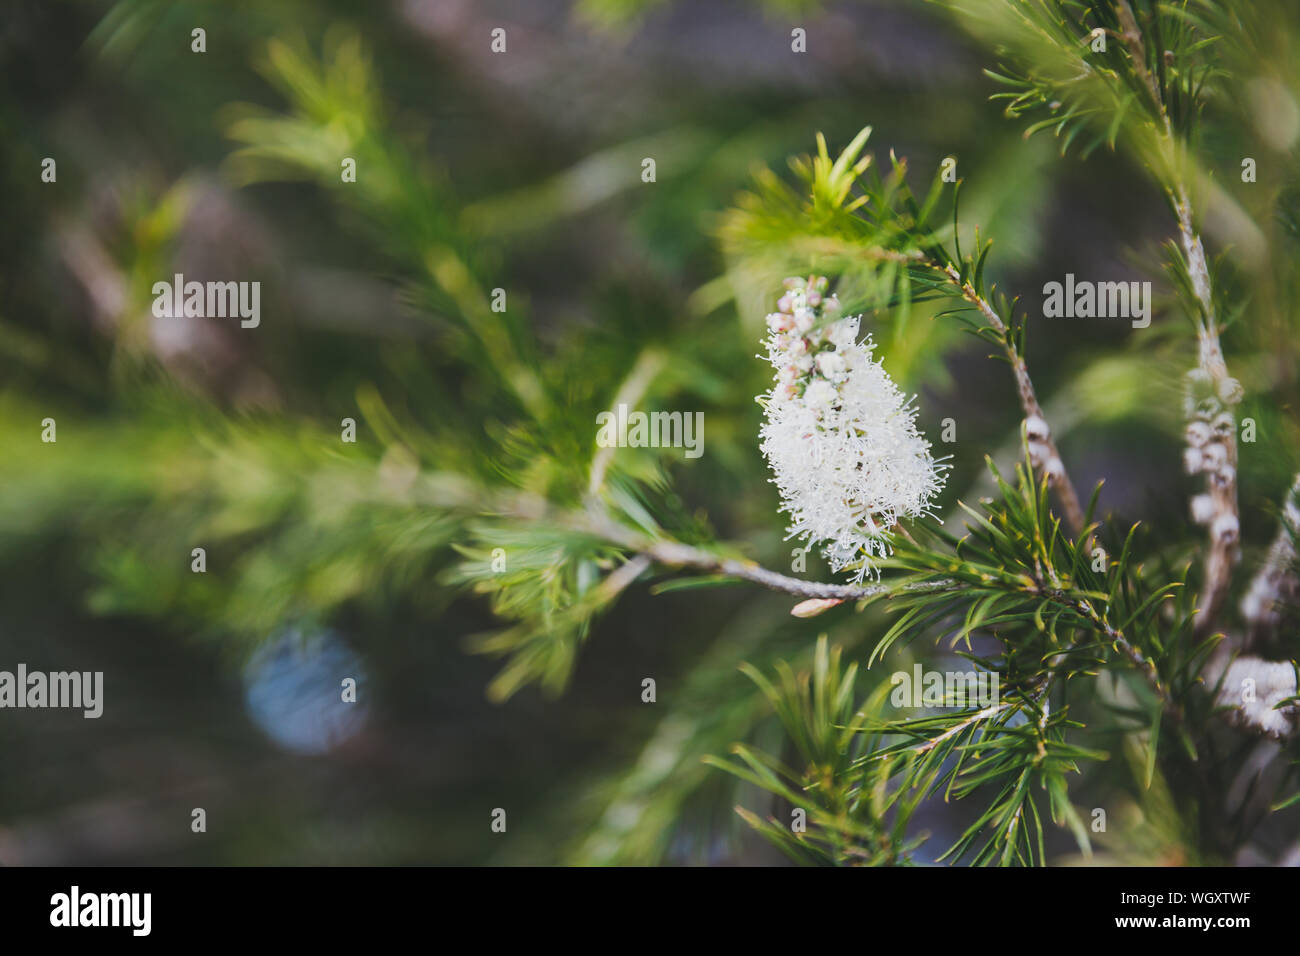 native Australian melaleuca plant with white flowers shot at shallow depth of field Stock Photo